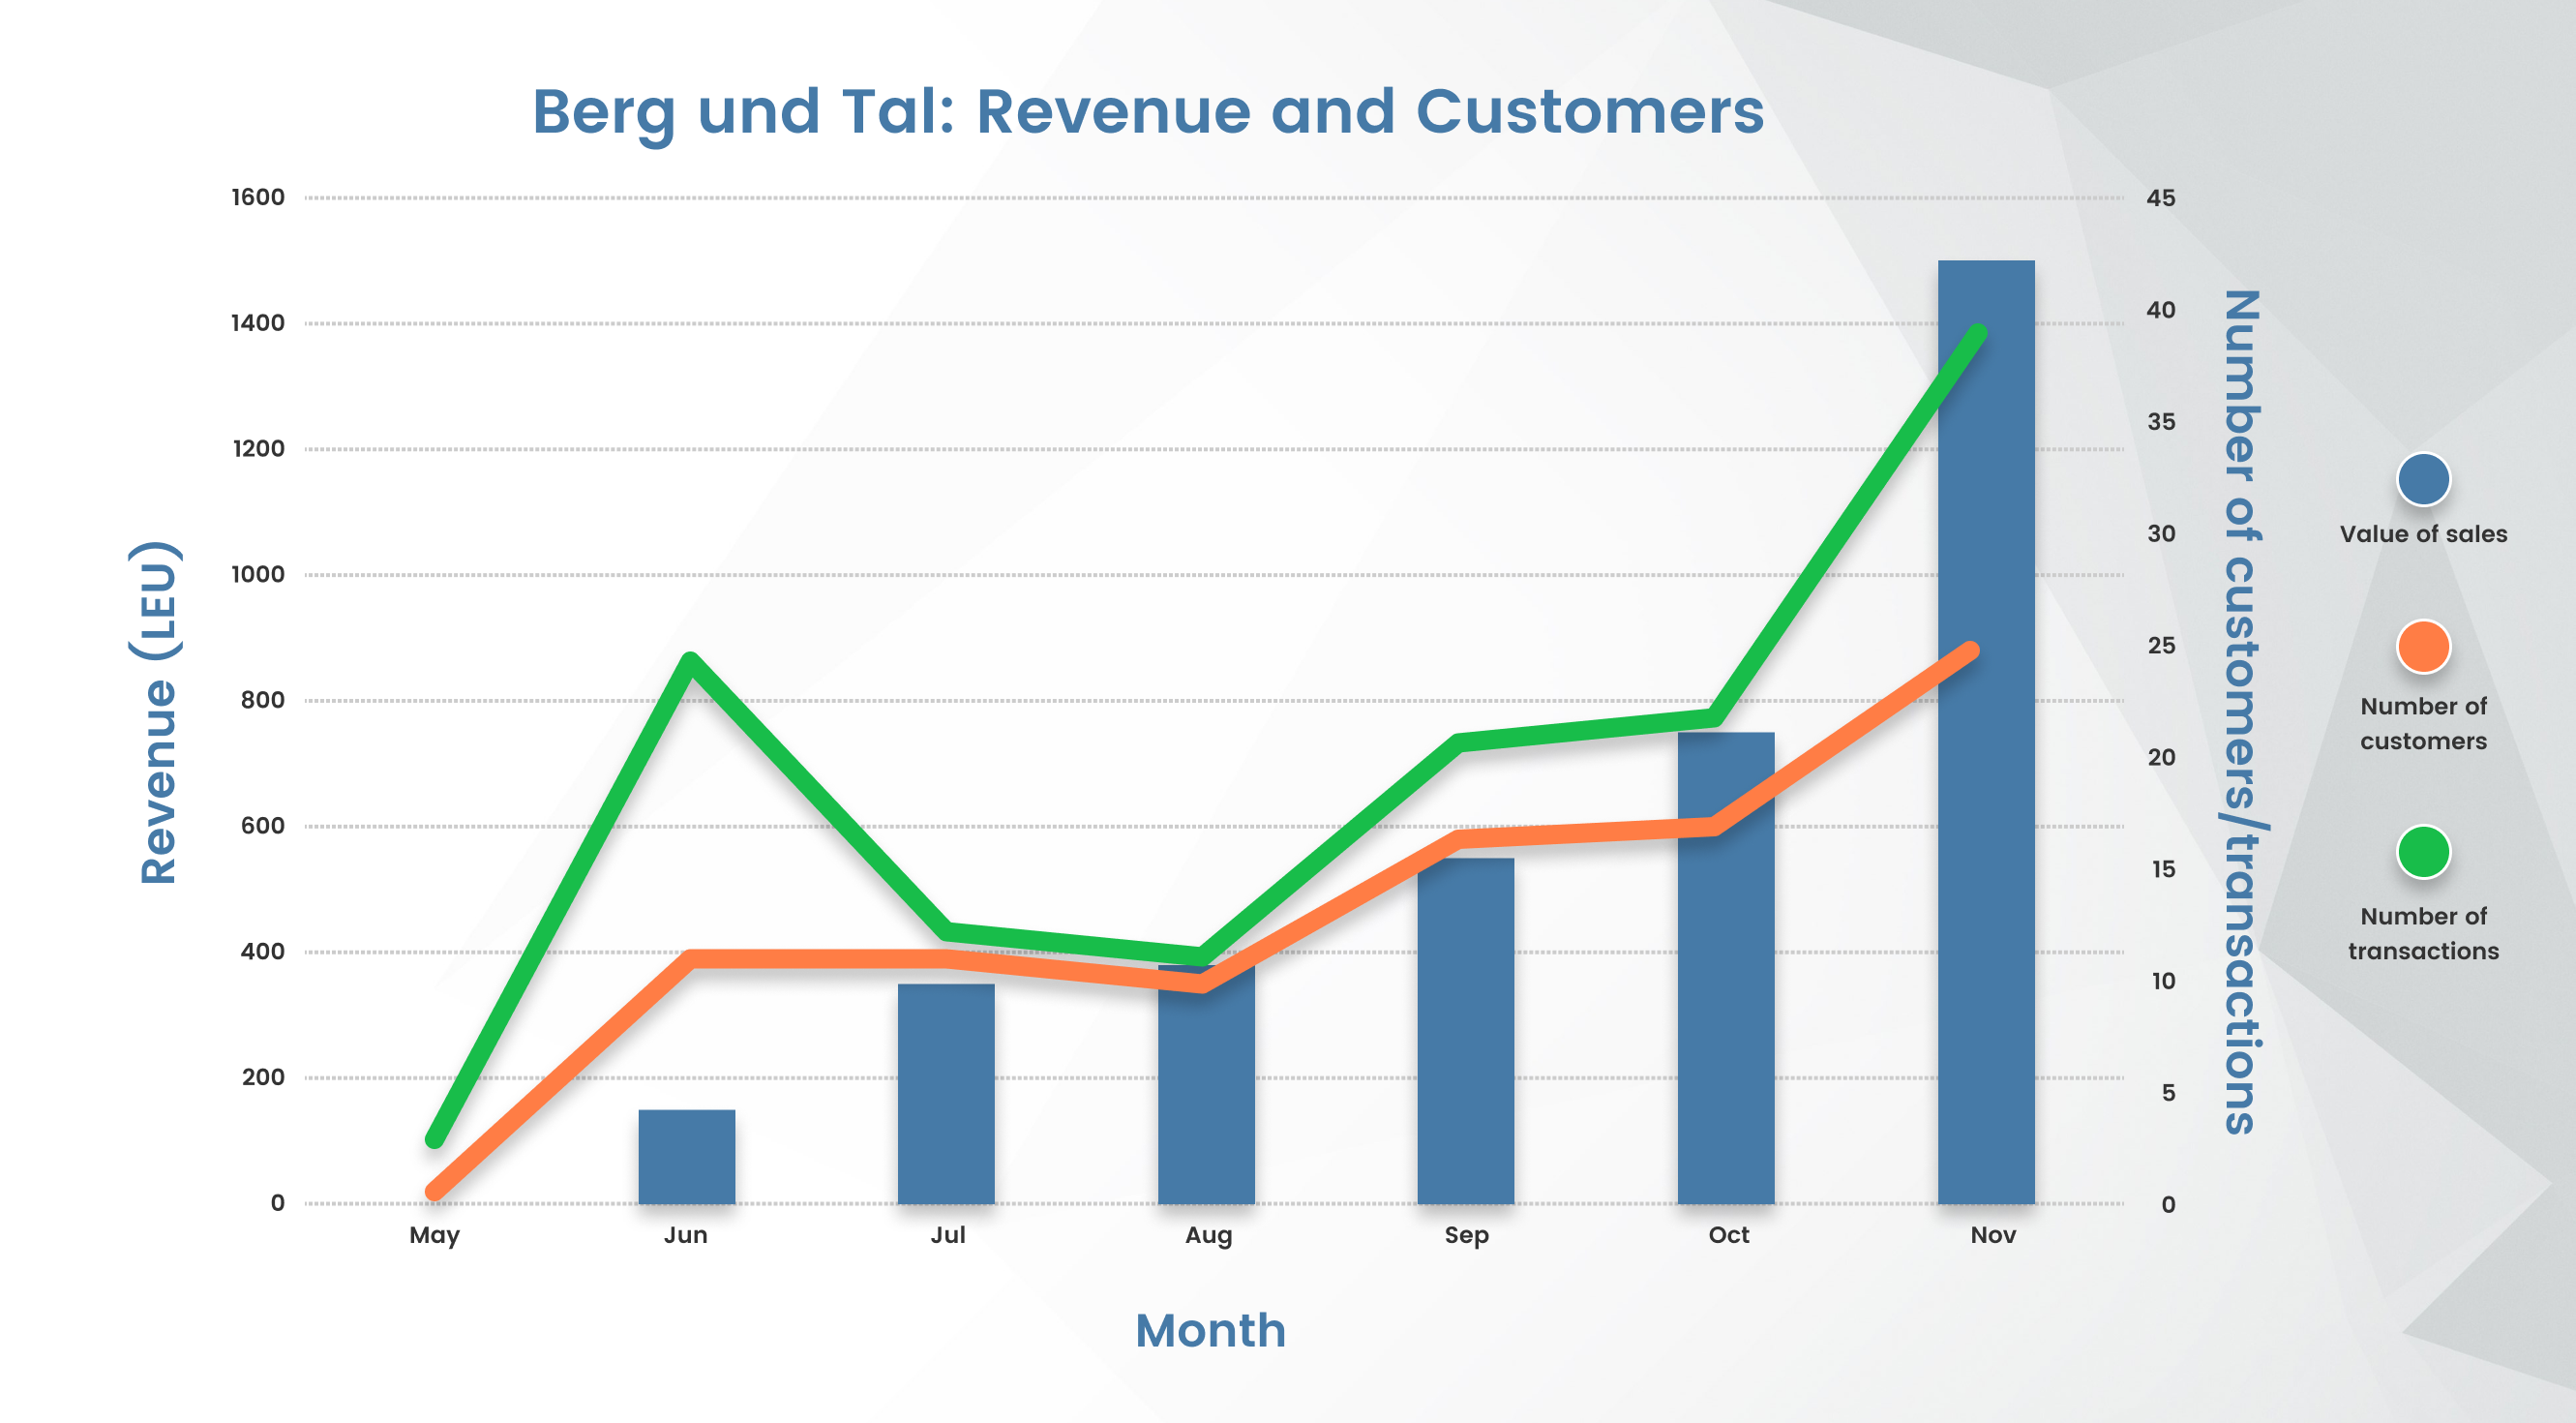  Figure 9: Berg und Tal: Revenue and customers
